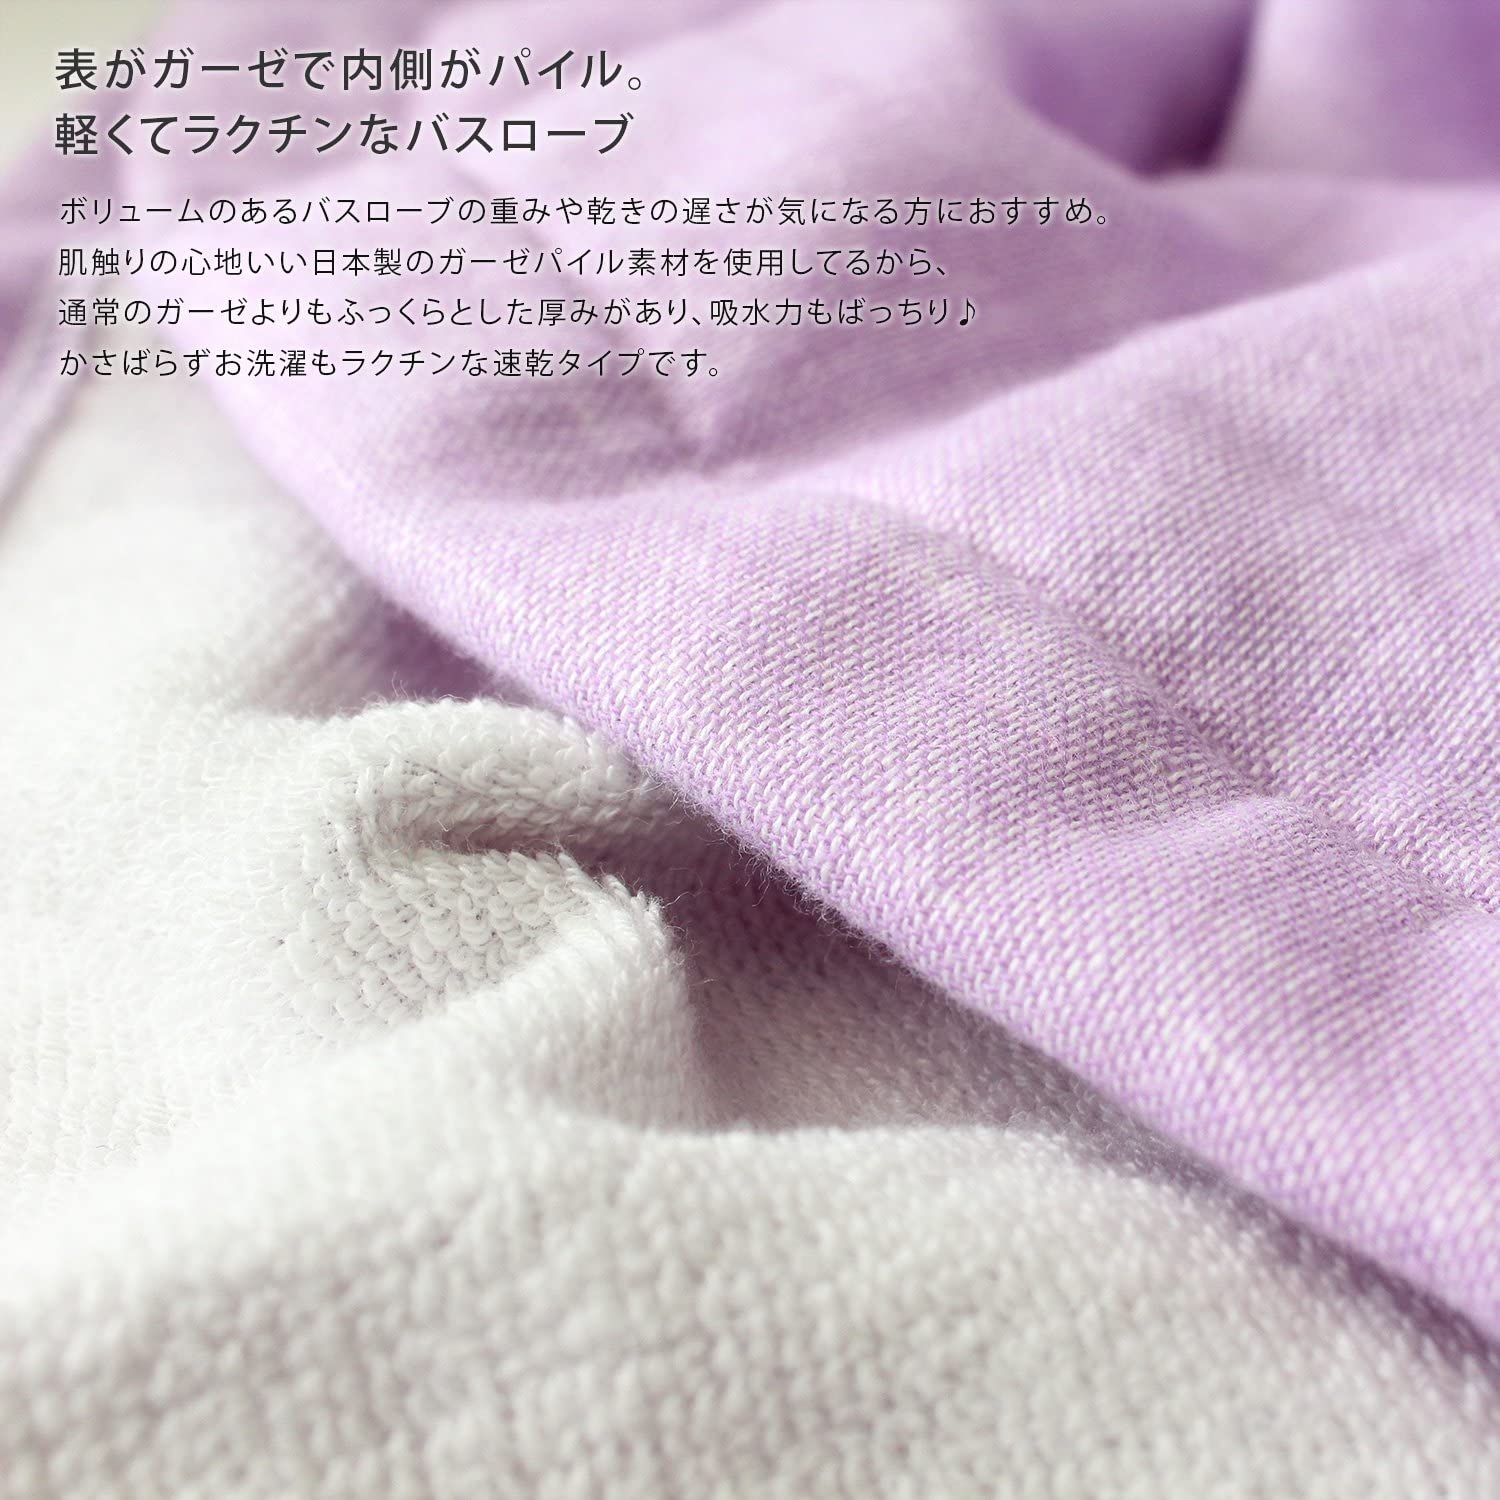 hiorie(ヒオリエ) プレーンガーゼバスローブの商品画像3 